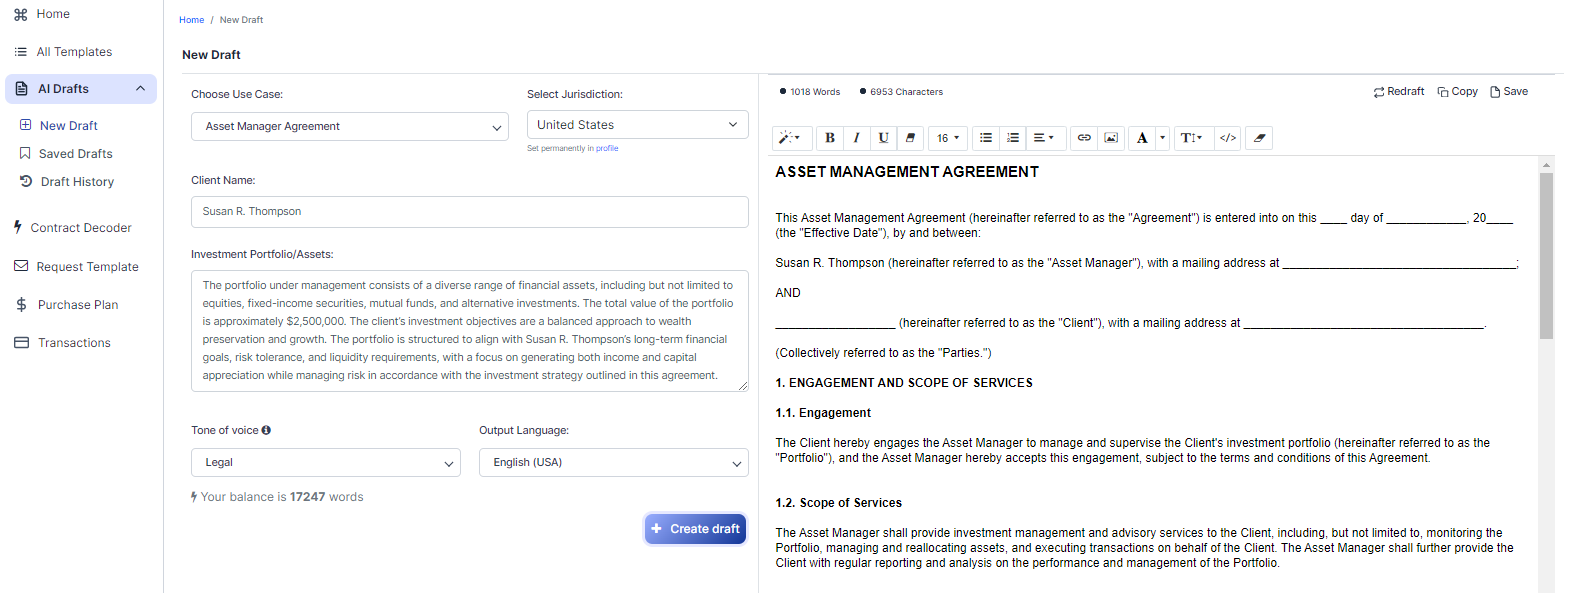 Asset Manager Agreement template